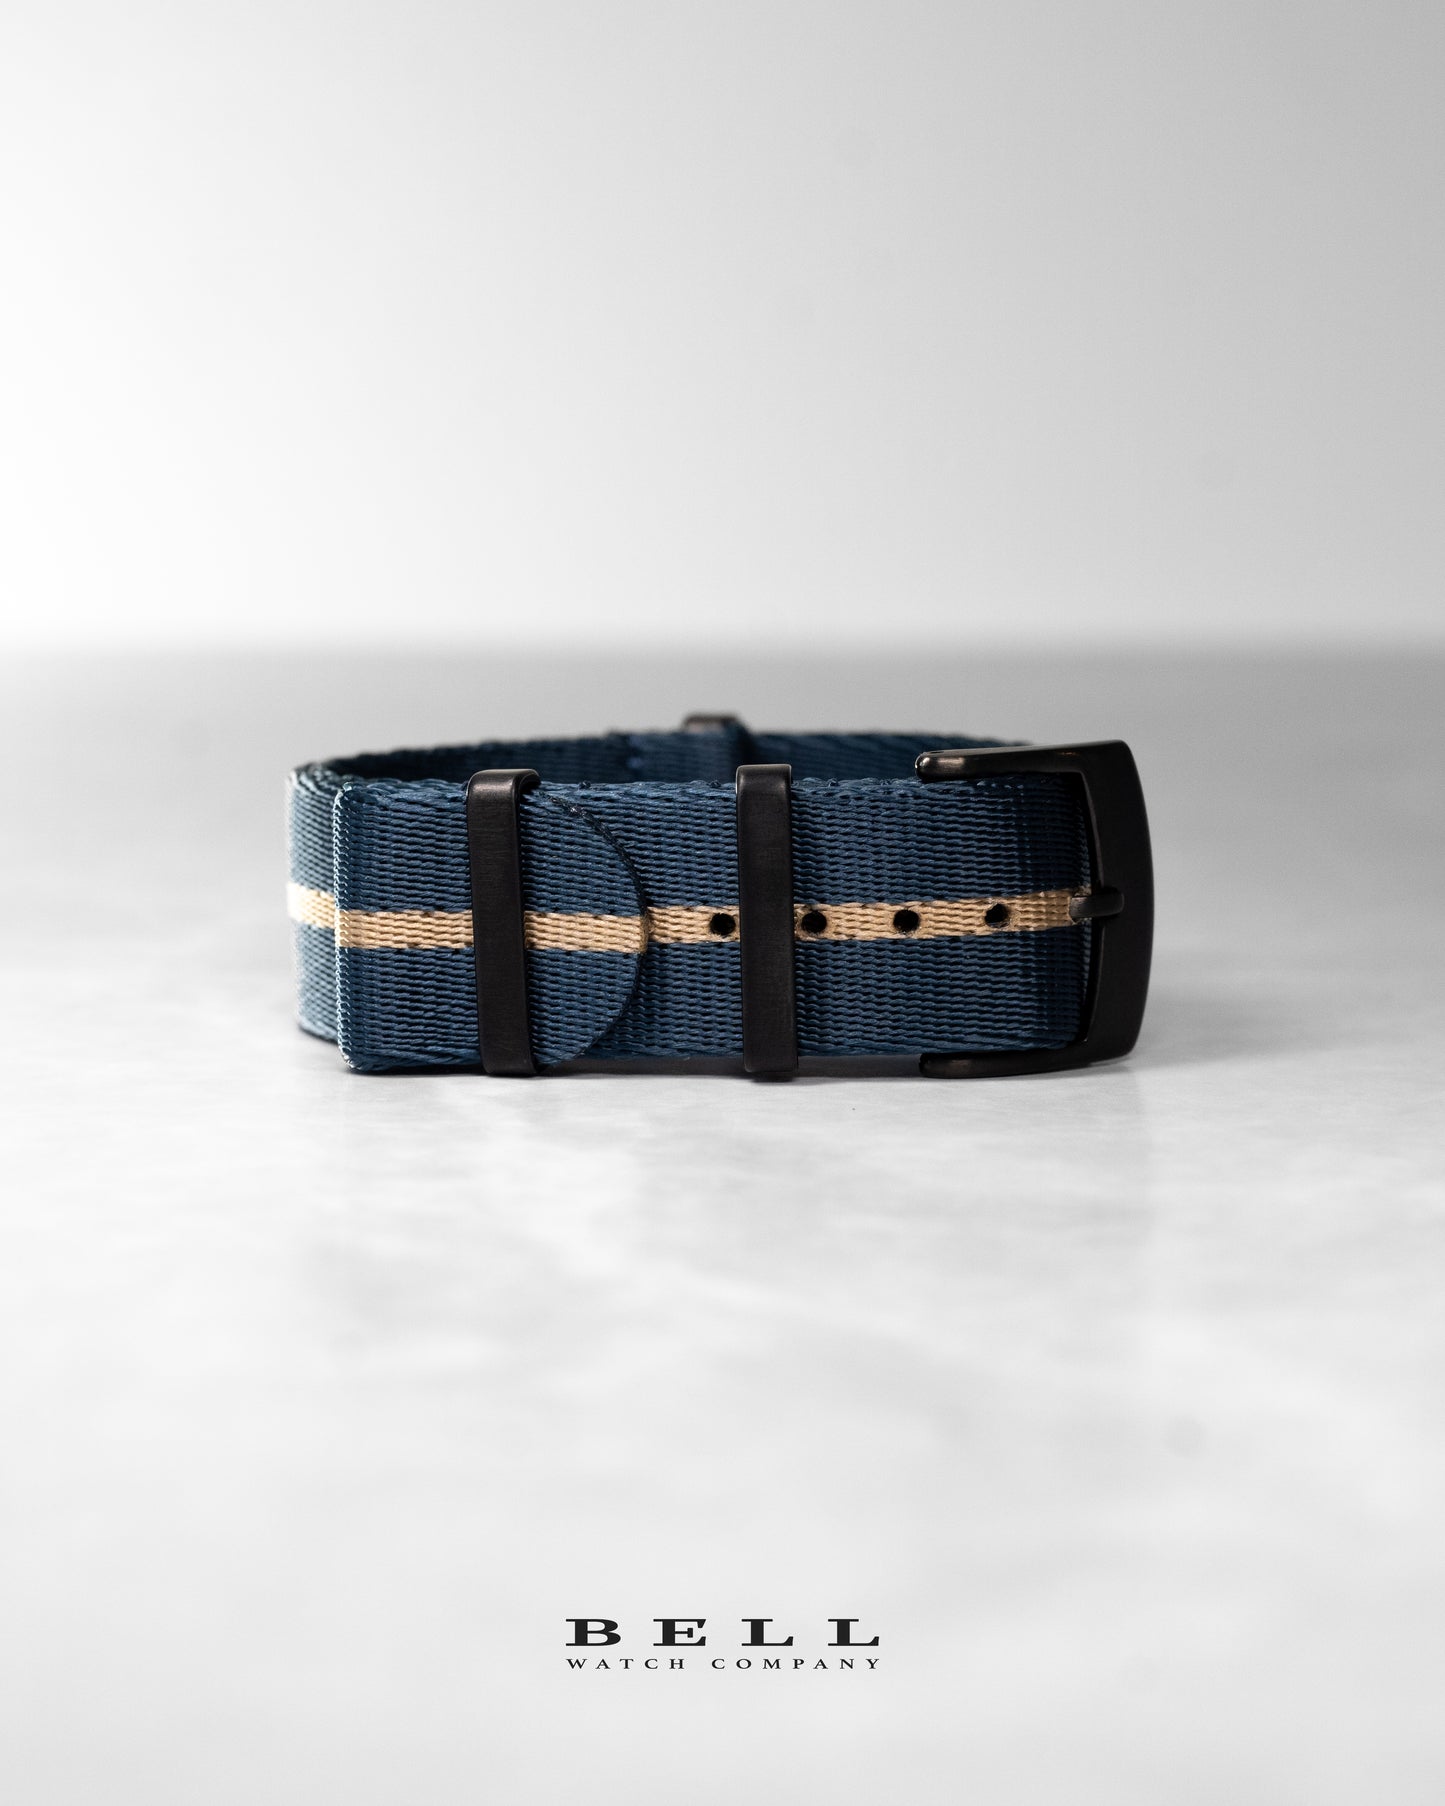 Premium Nylon 20mm Watch Strap Blue Khaki with Black Hardware Watch Strap